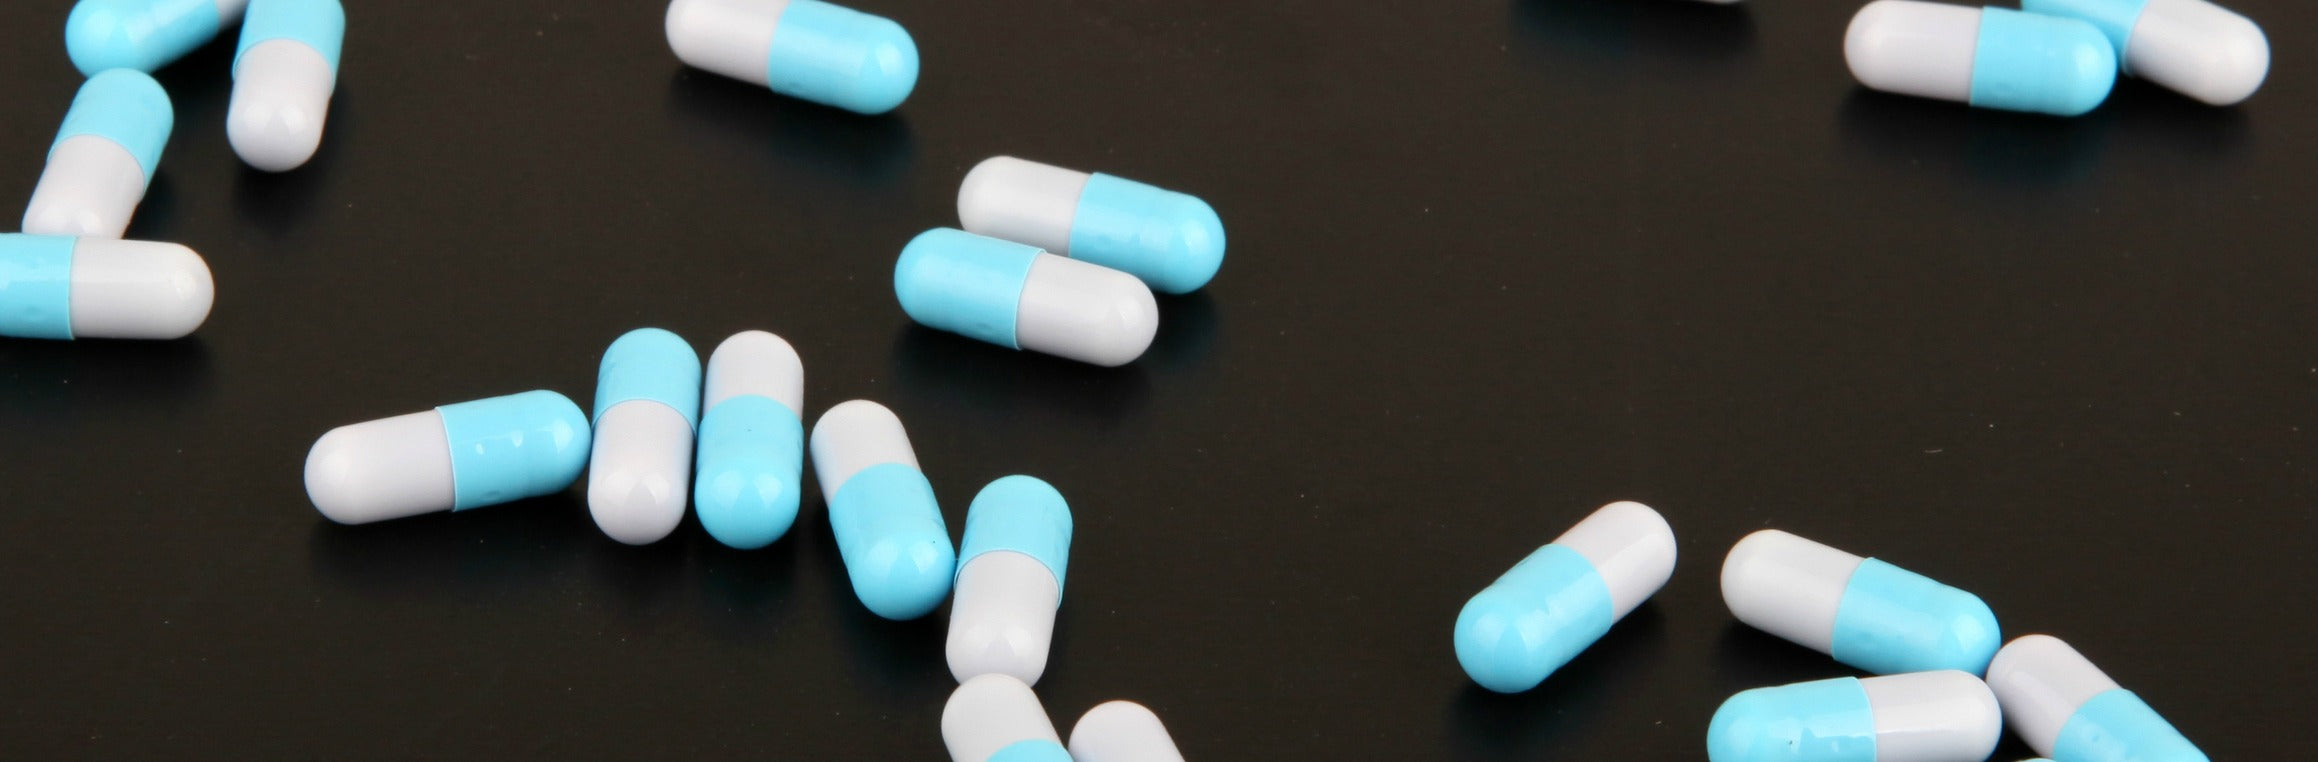 Are Prescription Sleeping Pills Safe?